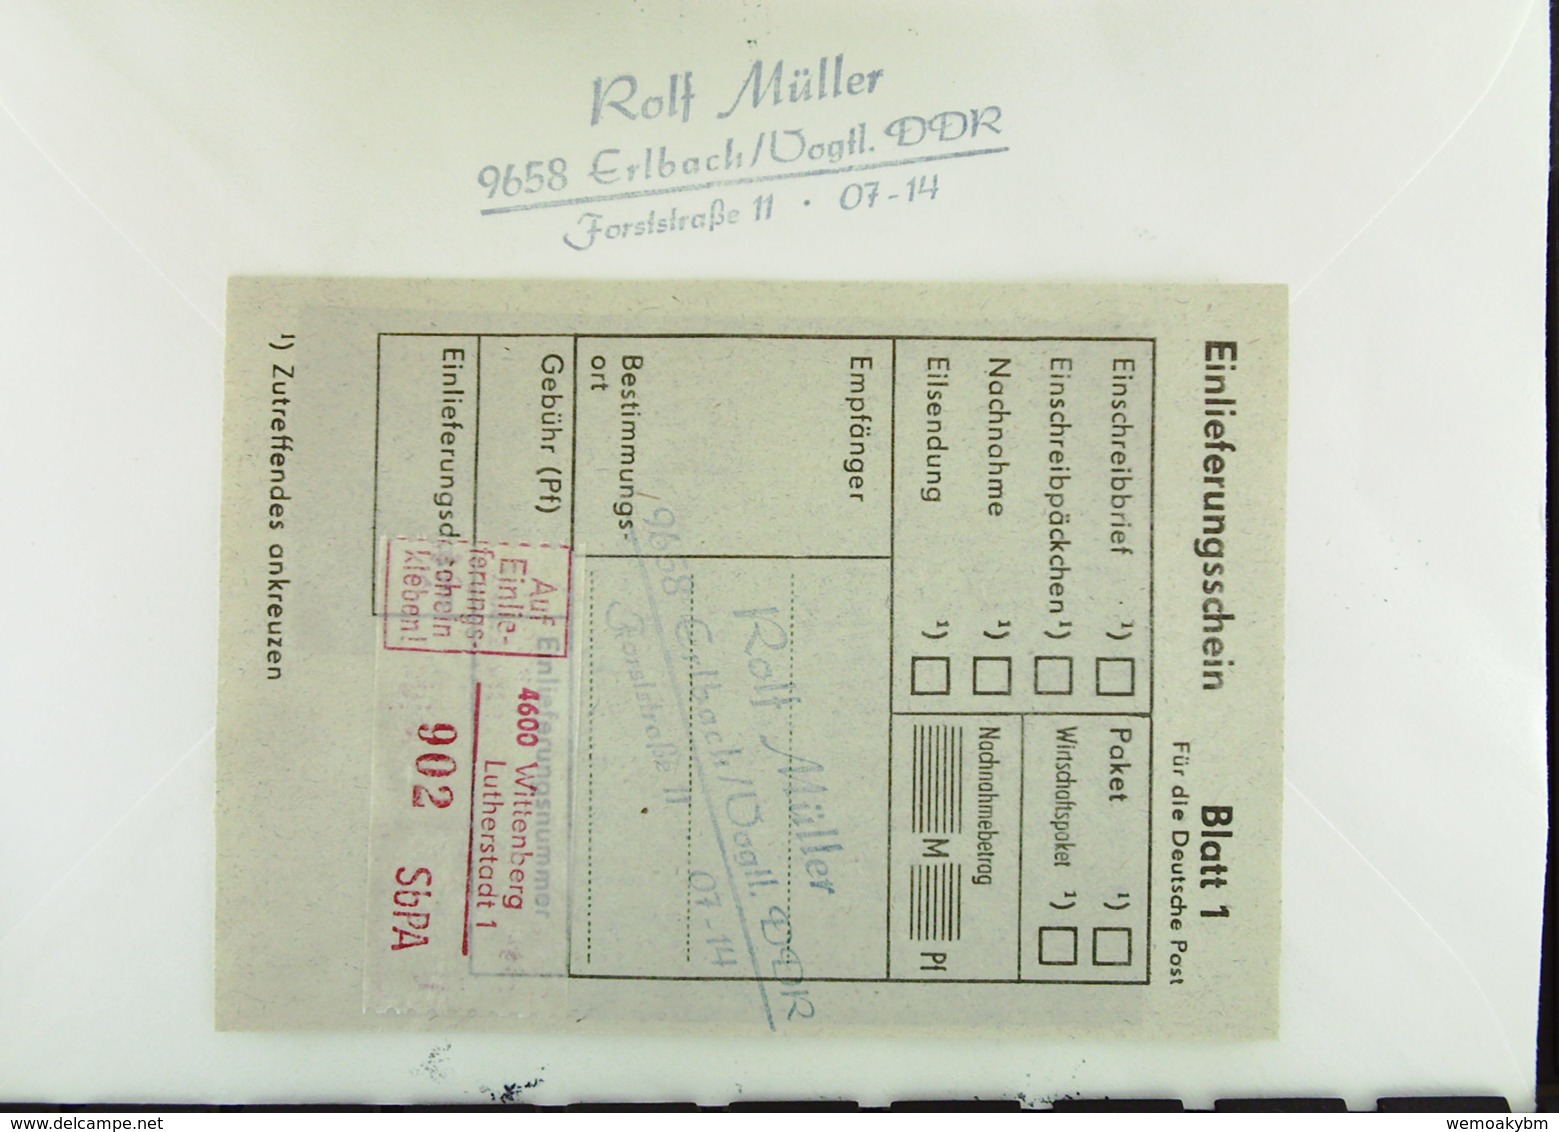 DDR: R-Eil-Fern-Bf 35 Pf Medizinhist. Instrumente Mit SbPA-R-Zettel, 4600 Wittenber-L-Stadt (902) 28.6.90 Knr: 2643(2) - Labels For Registered Mail